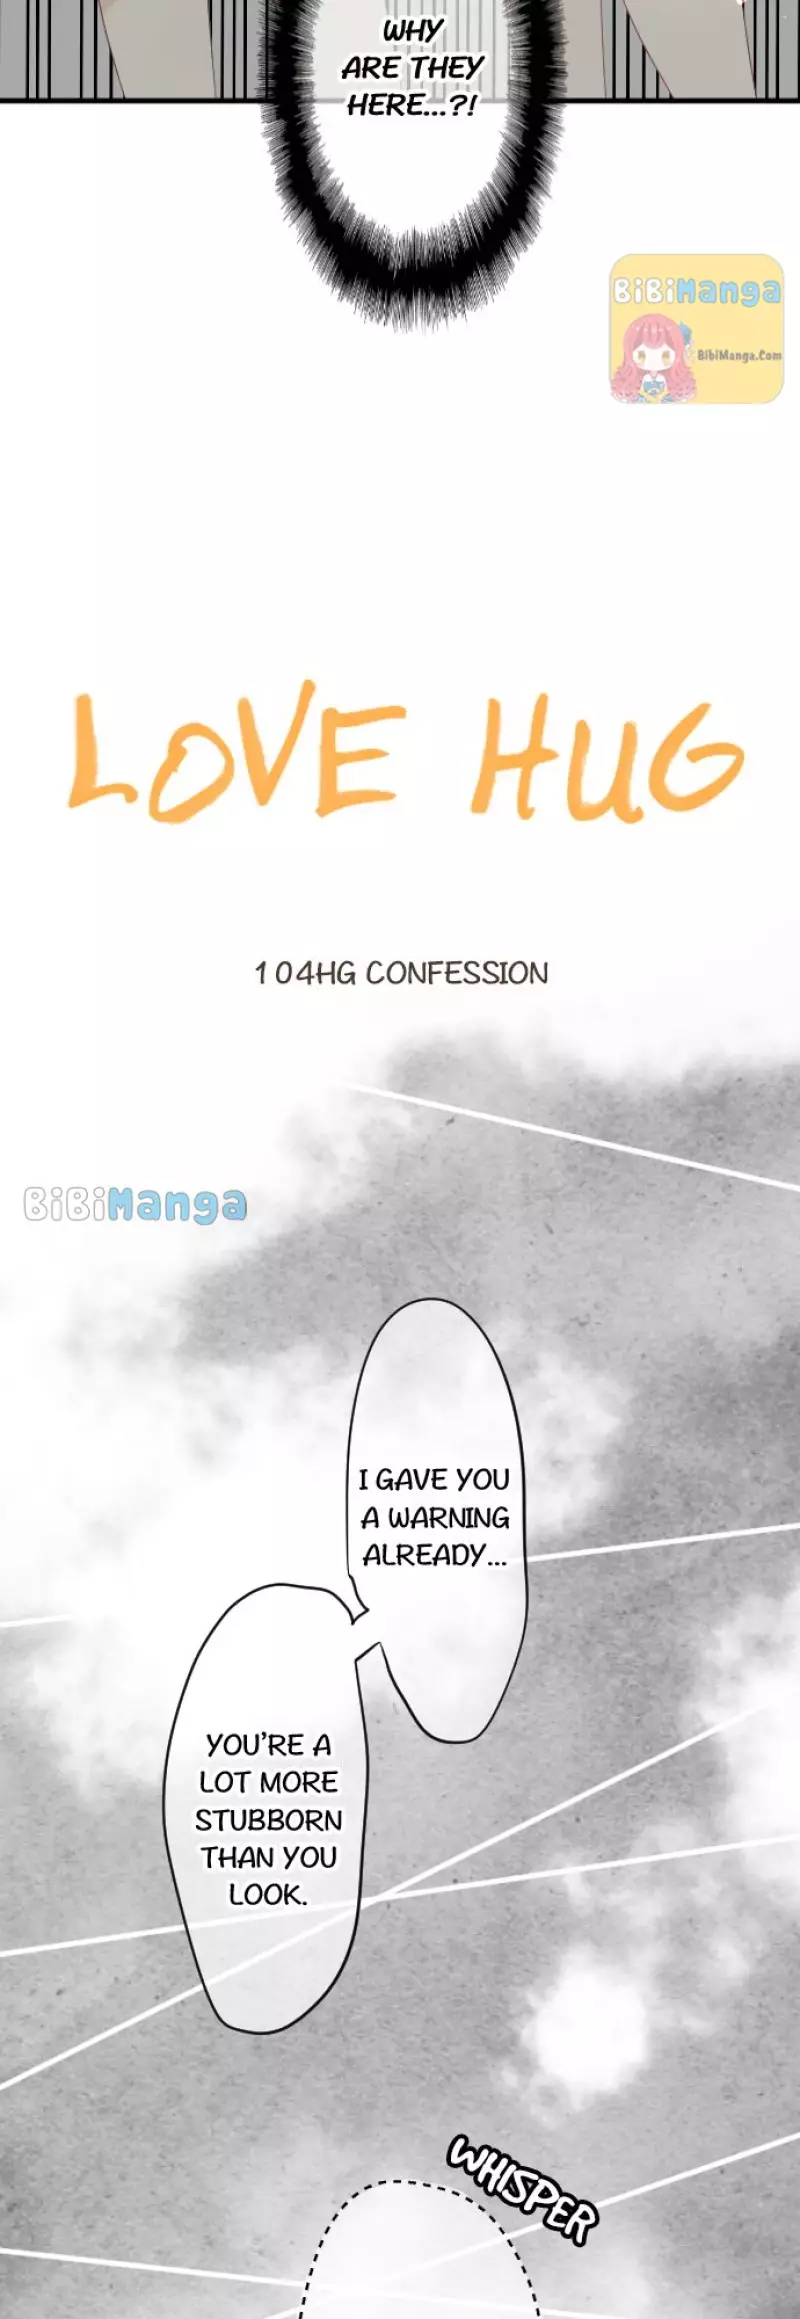 Love Hug - 104 page 4-54e89eaa